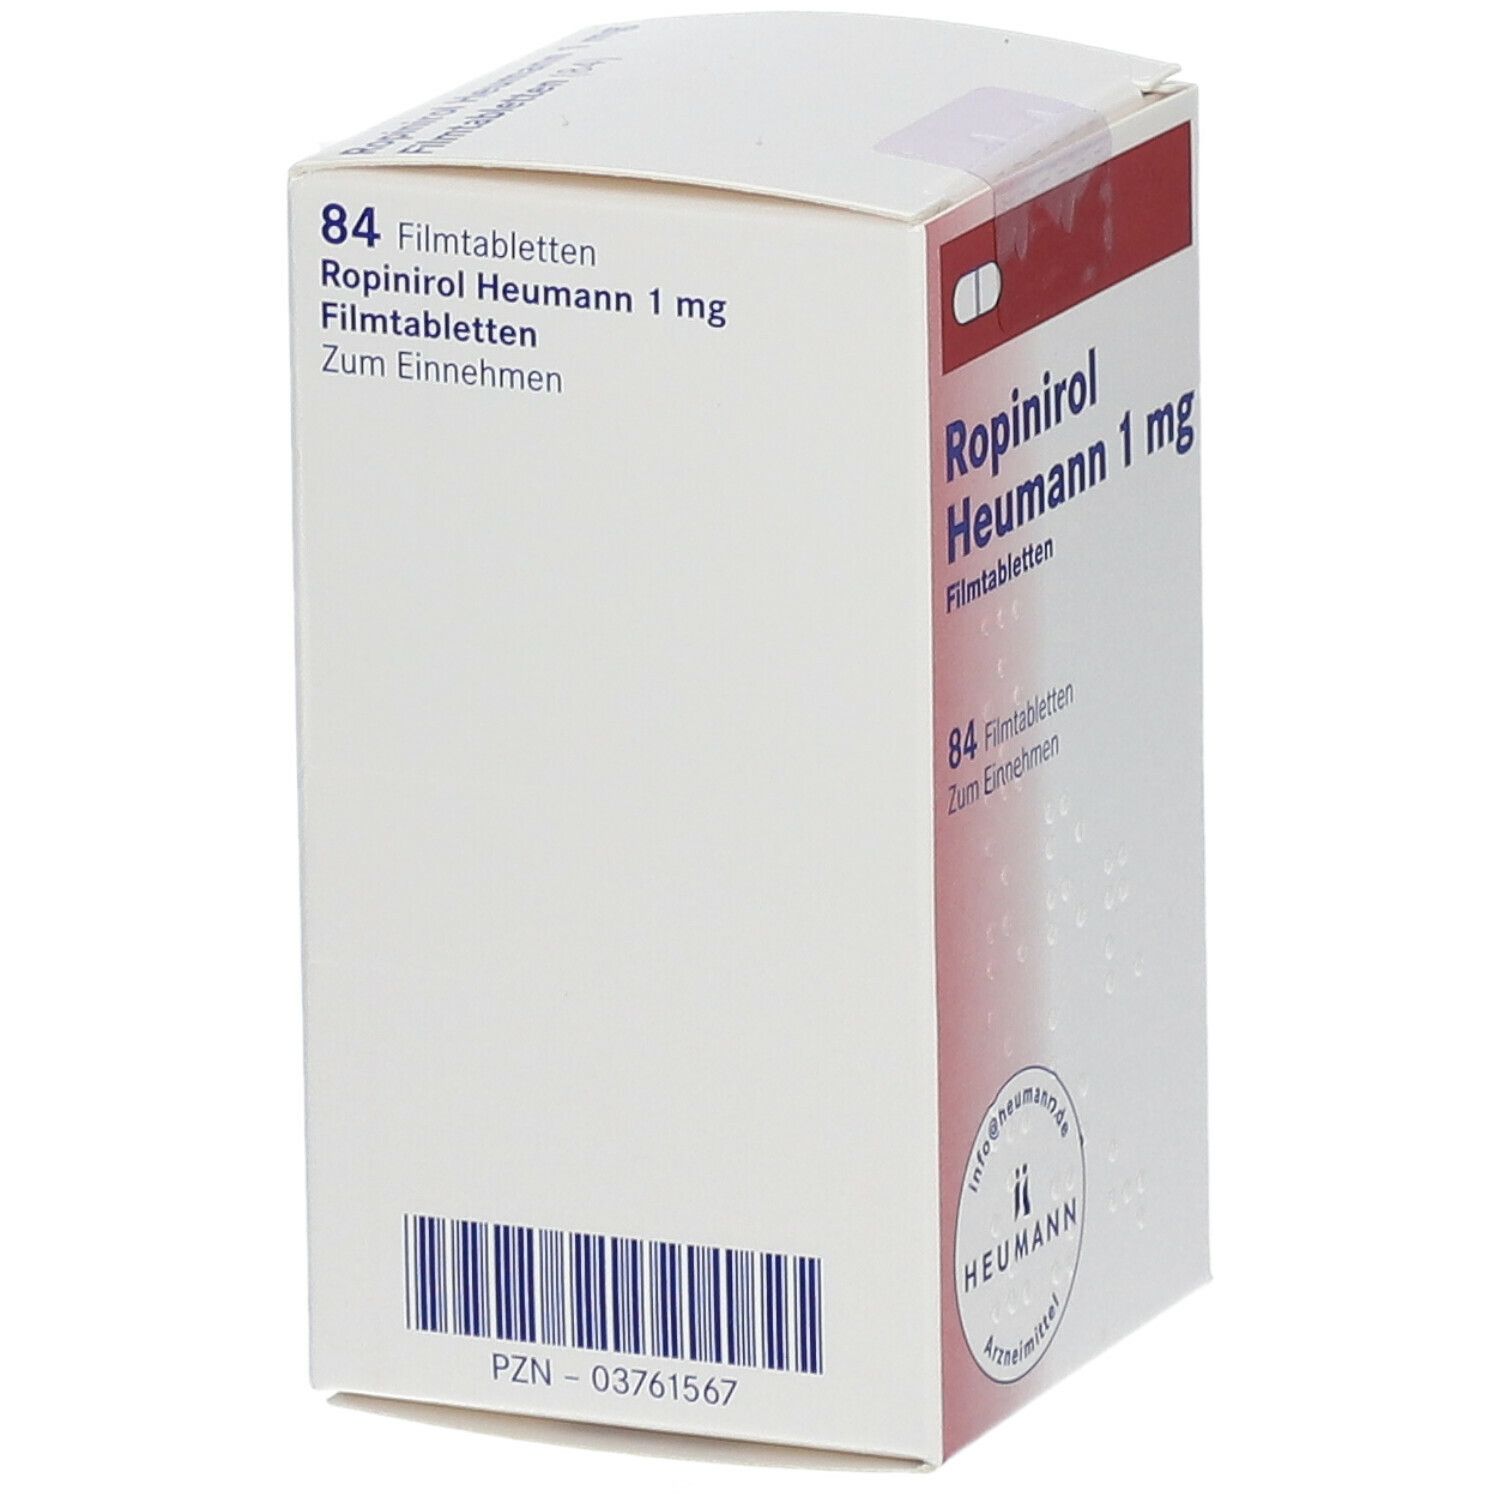 Ropinirol Heumann 1 mg